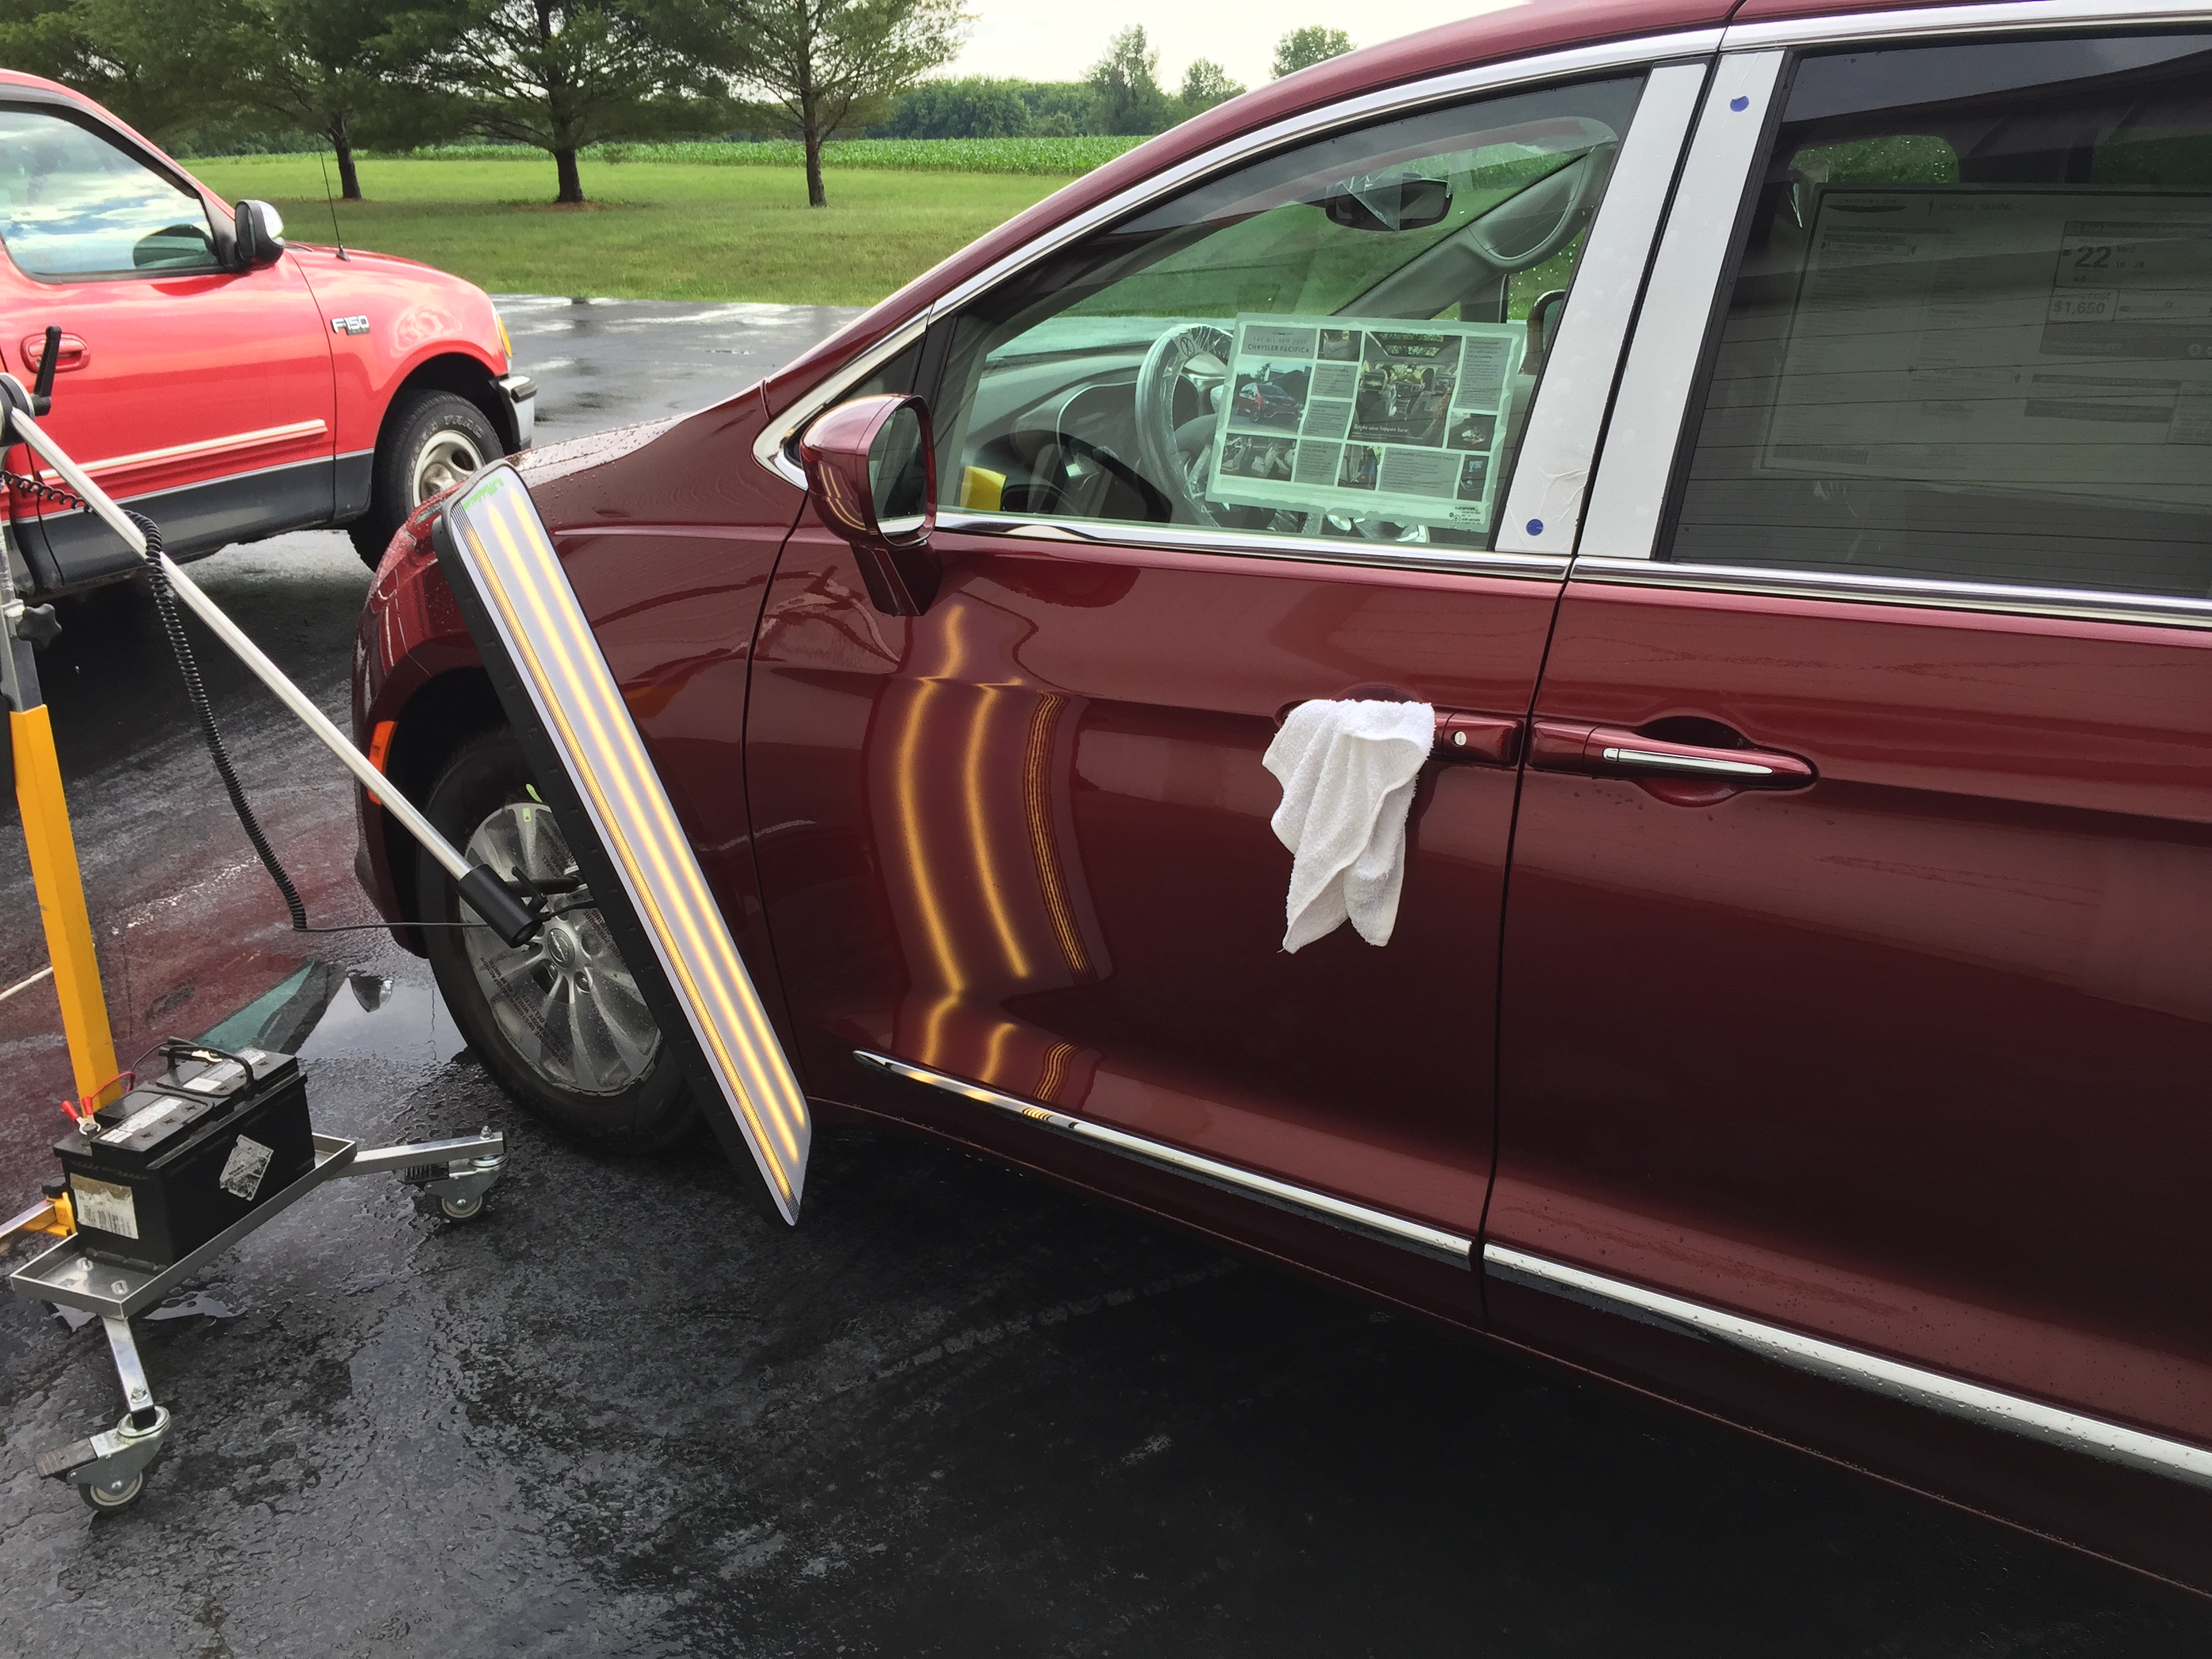 2017 Chrysler Pacifica Touring, Mobile dent Repair Springfield IL, Taylorville IL, Decatur IL, Sharp body line paintless dent repair by Michael Bocek